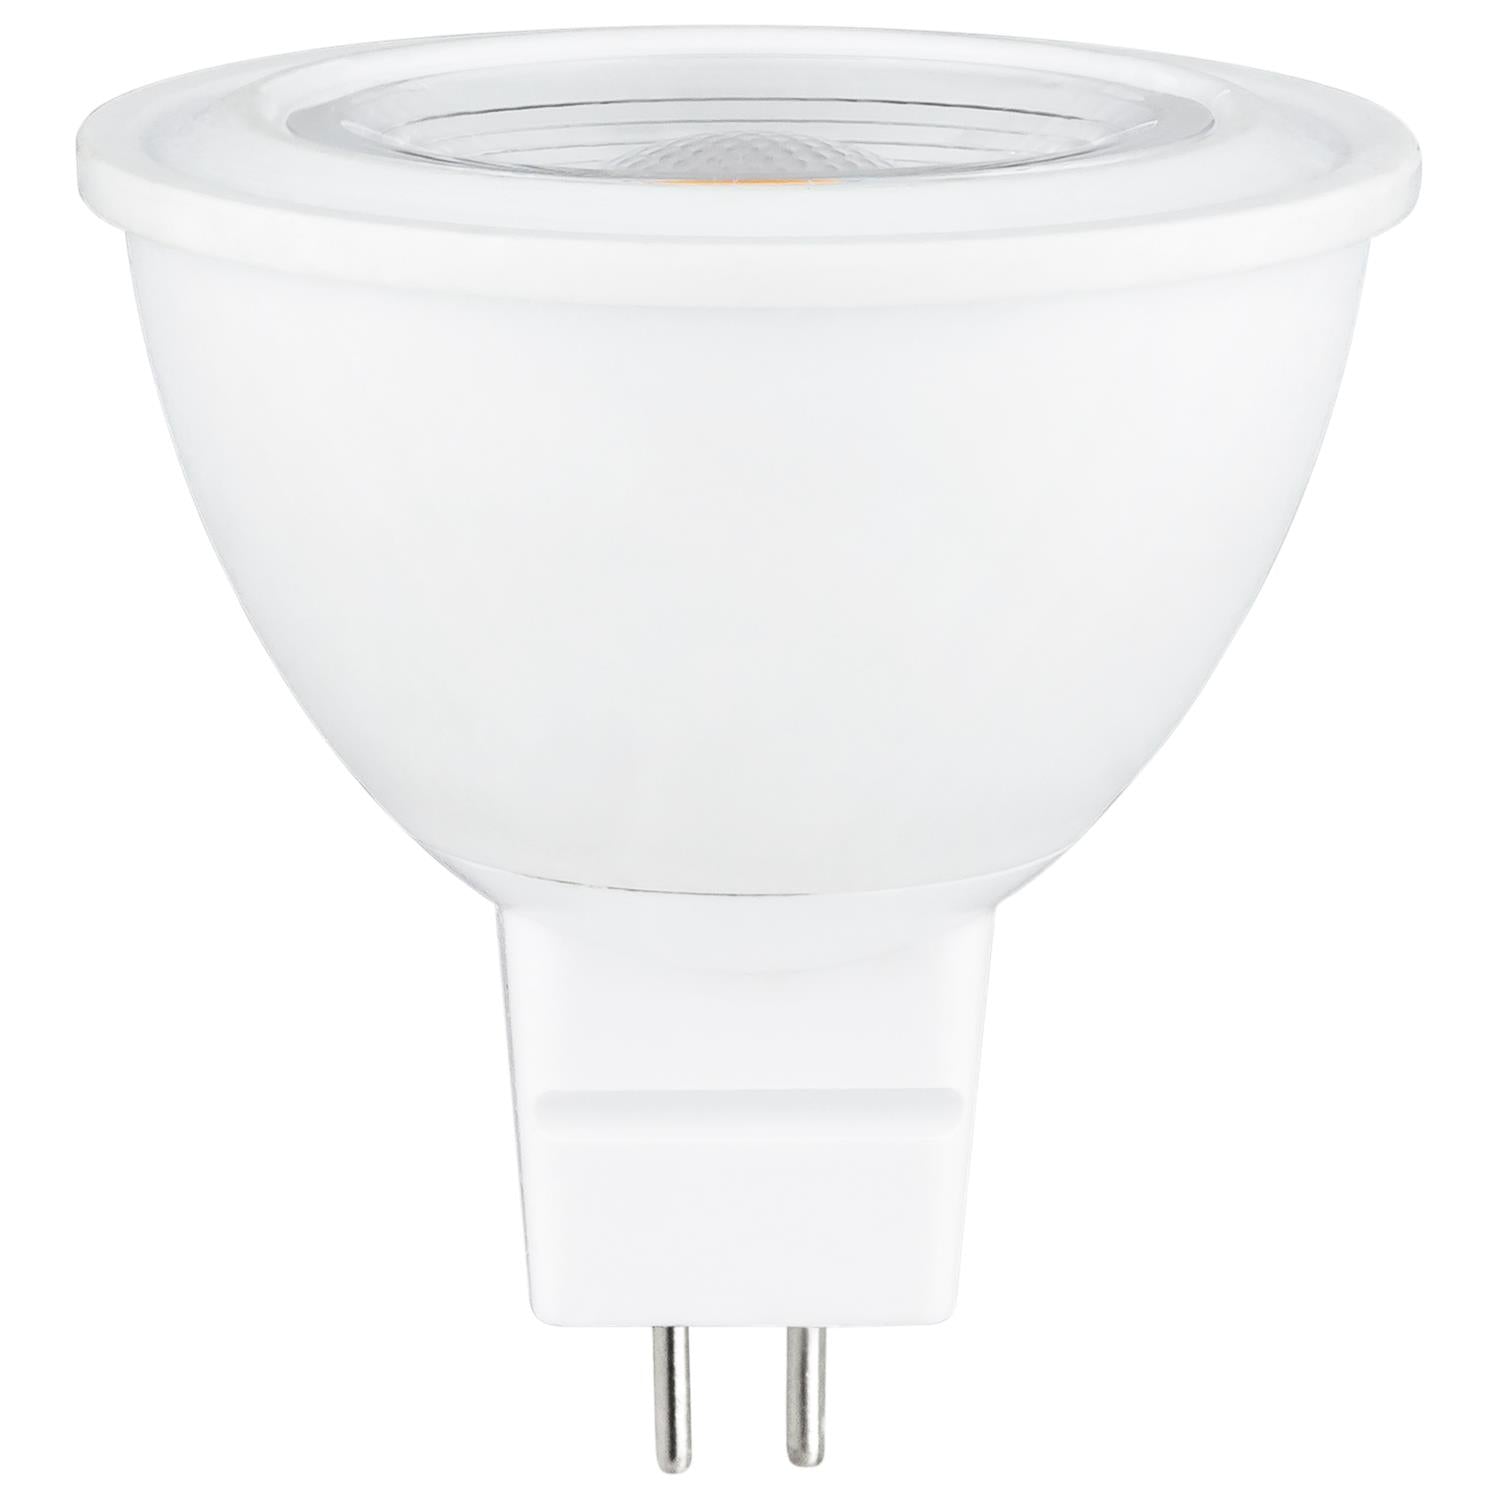 LED 7watt GU5.3 MR16 40° 5000K flood light bulb cool white dimmable low  voltage